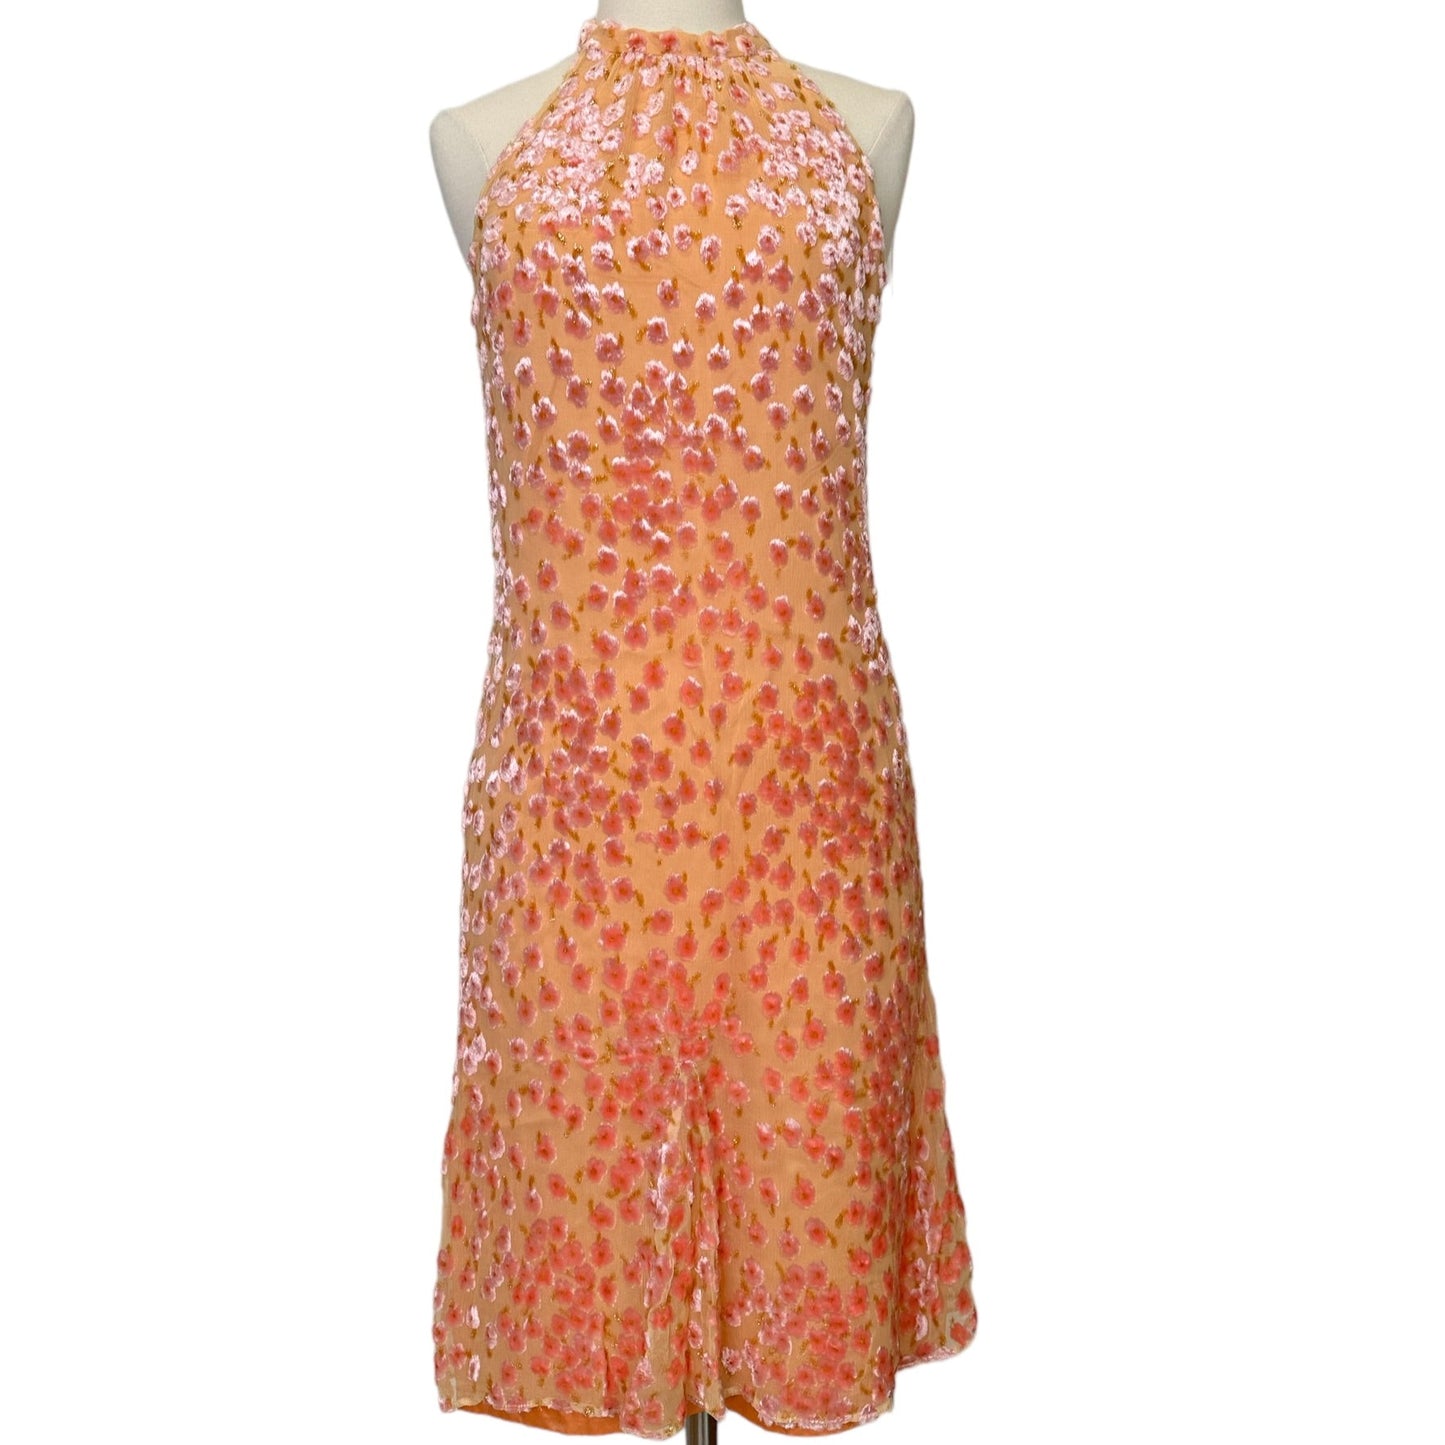 Orange & Pink Print Dress - S